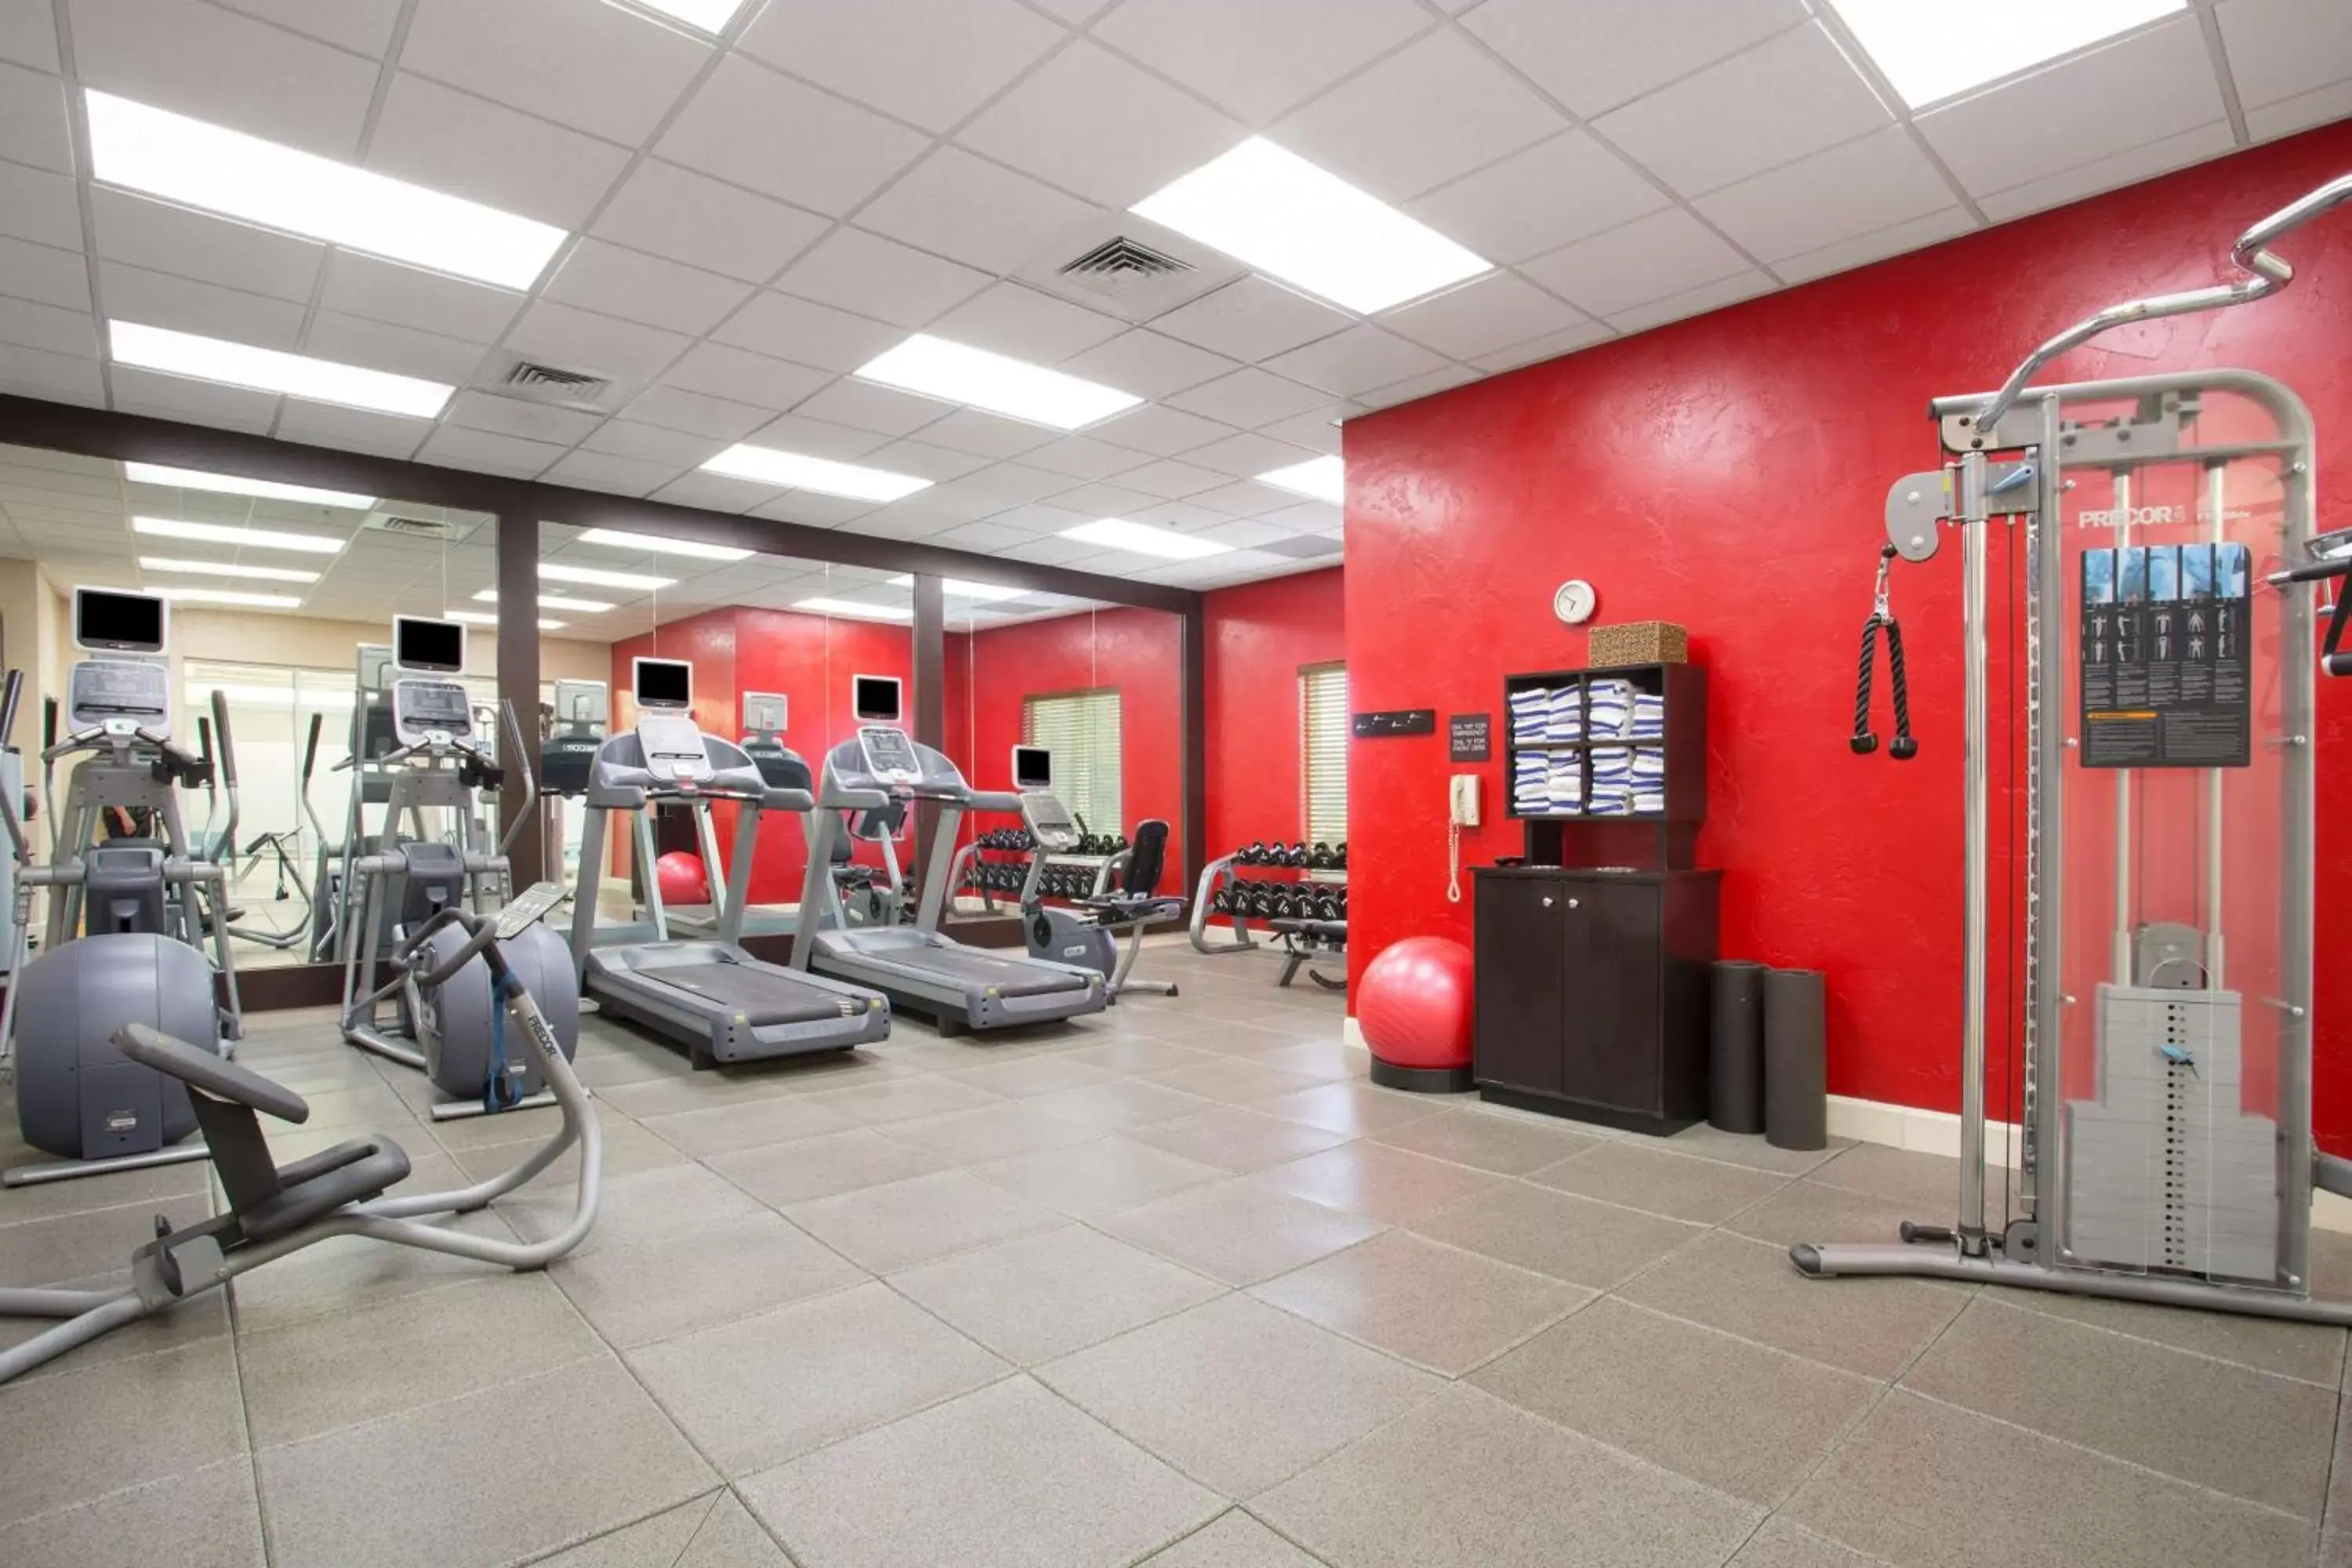 Fitness centre/facilities, Fitness Center/Facilities in Hilton Garden Inn Salt Lake City/Layton